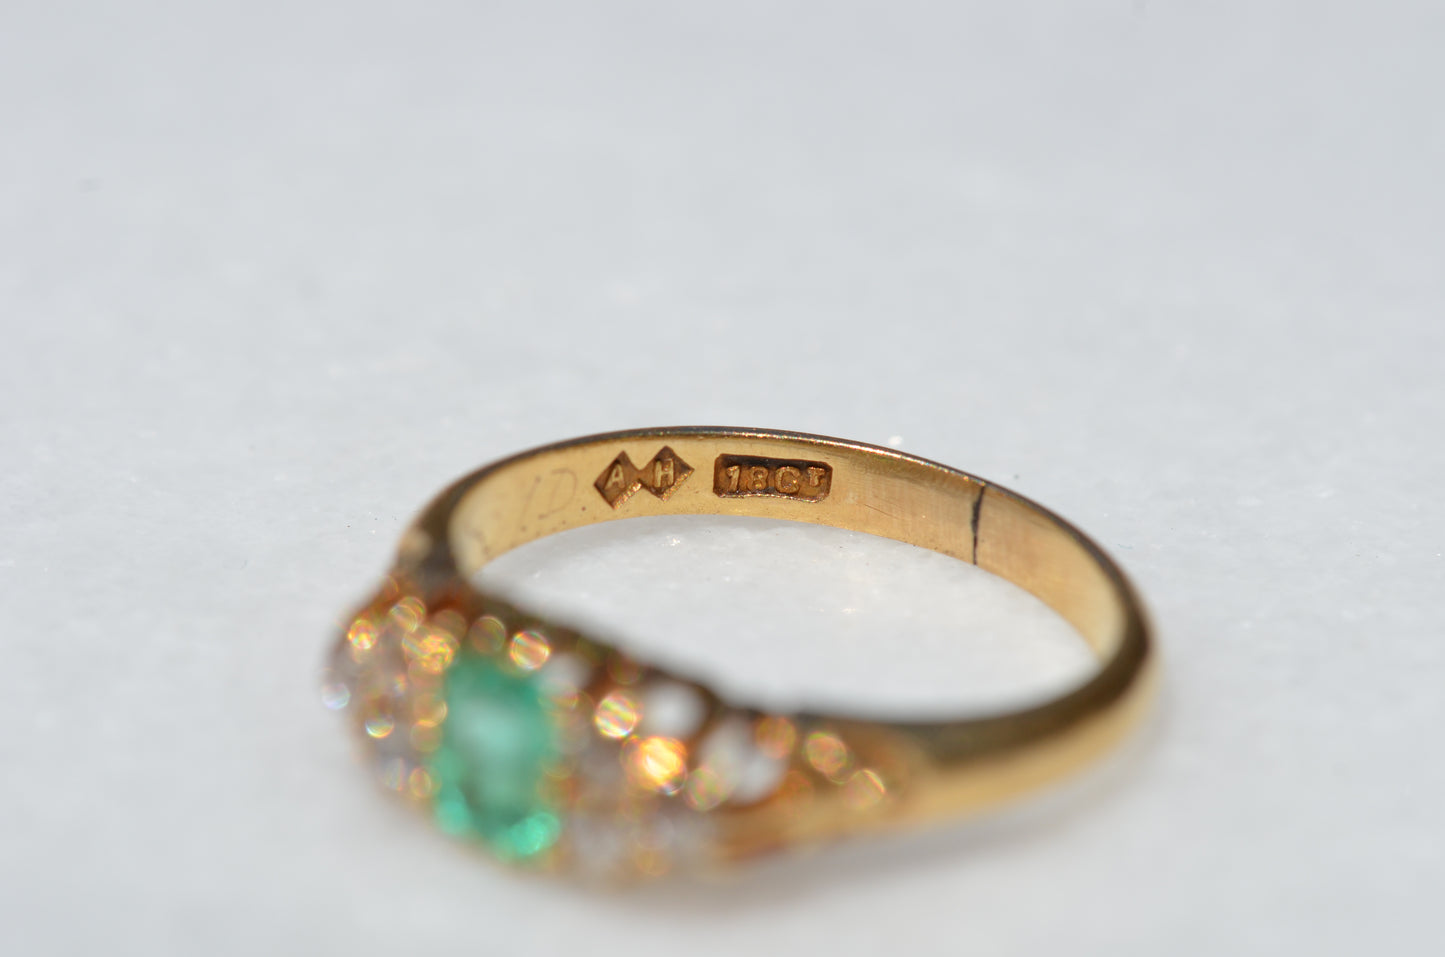 Vibrant Antique Emerald Cluster Ring